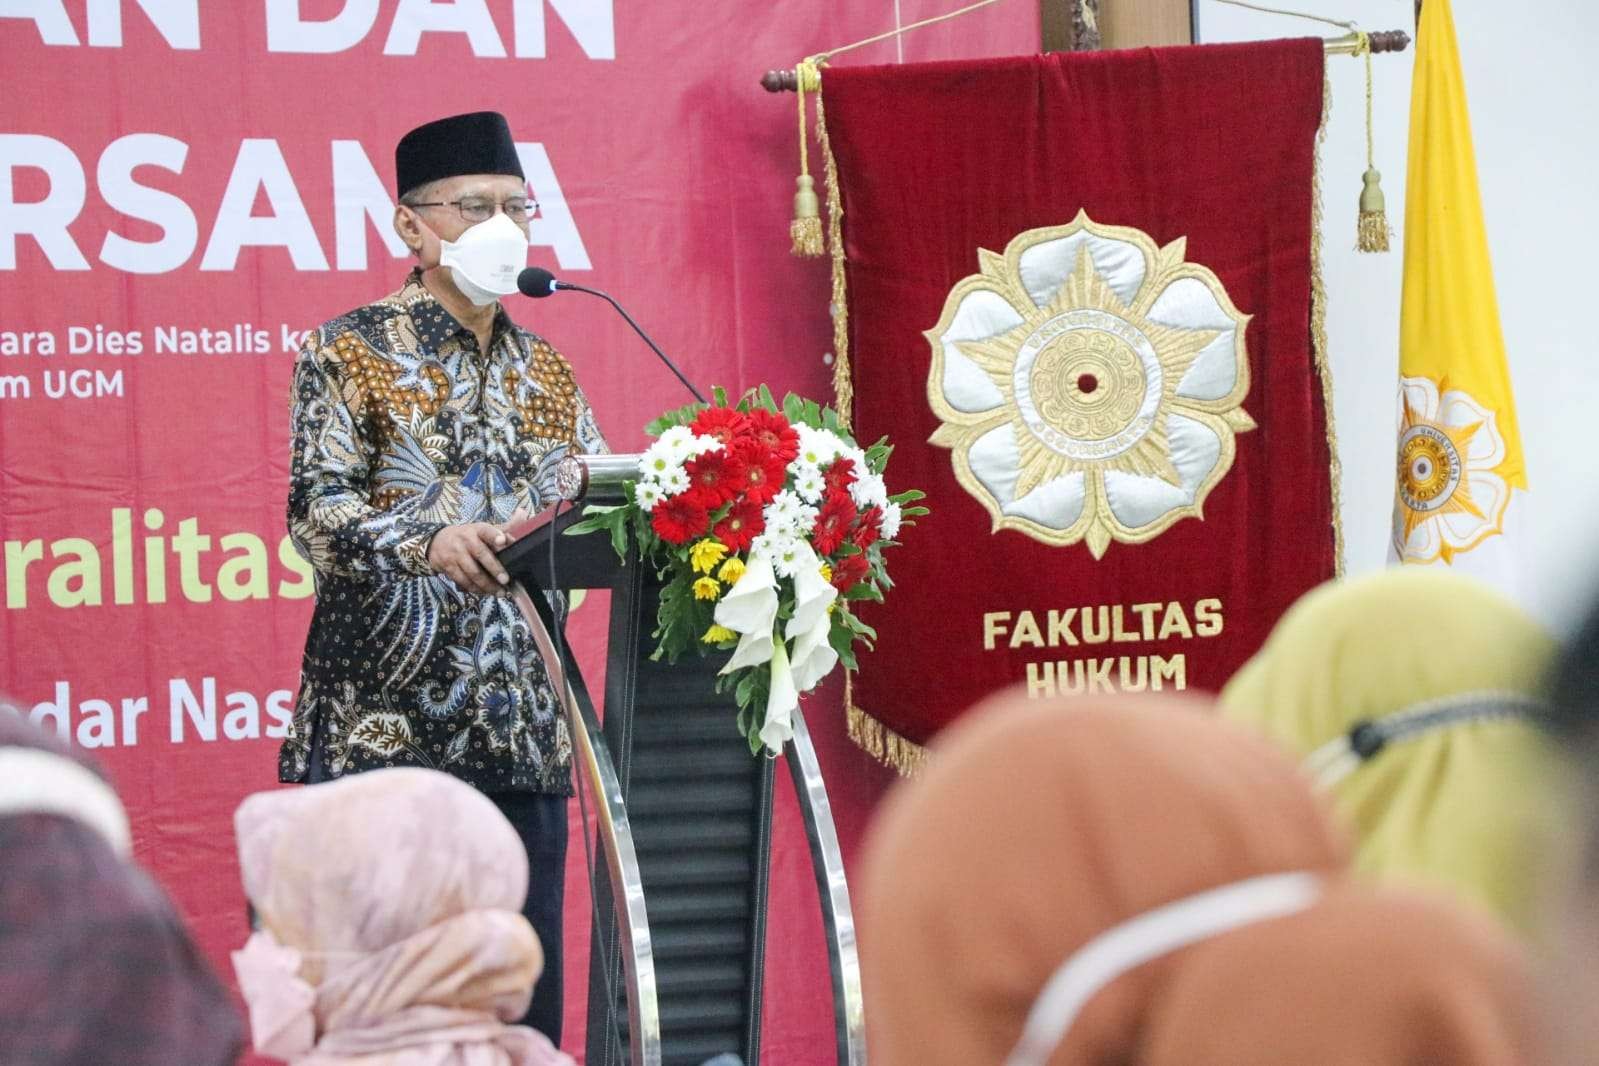 Ketua Umum PP Muhammadiyah Haedar Nashir dalam rangkaian acara Dies Natalis ke-76 Fakultas Hukum Universitas Gadjah Mada pada Rabu 2 Februari 2022. (Foto: Istimewa)